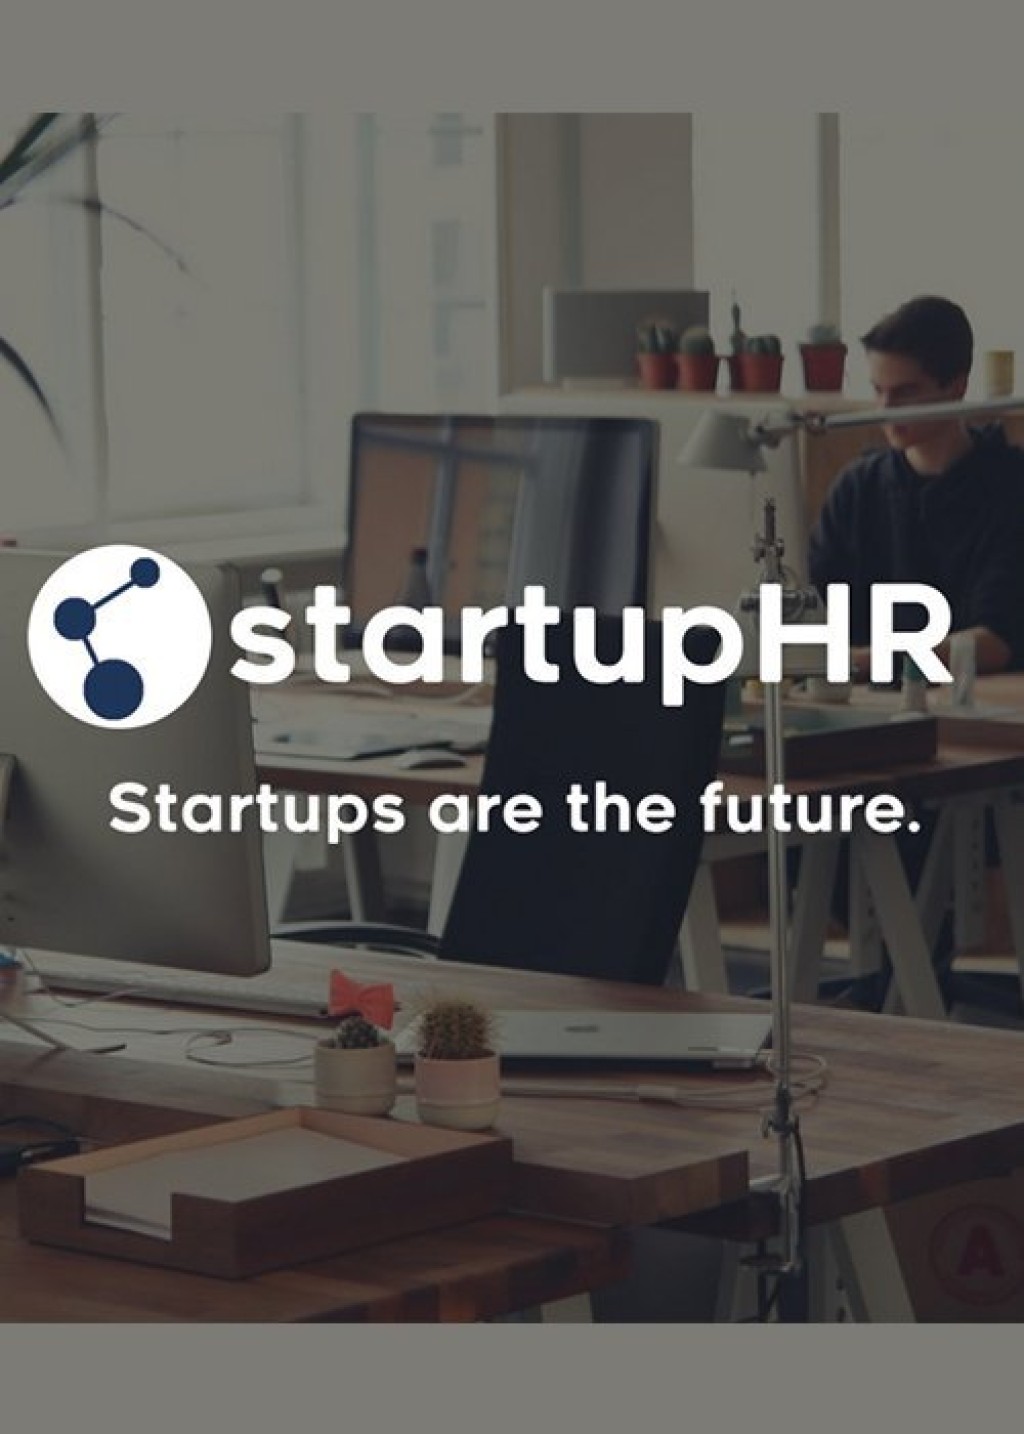 StartupHR seni bekliyor!